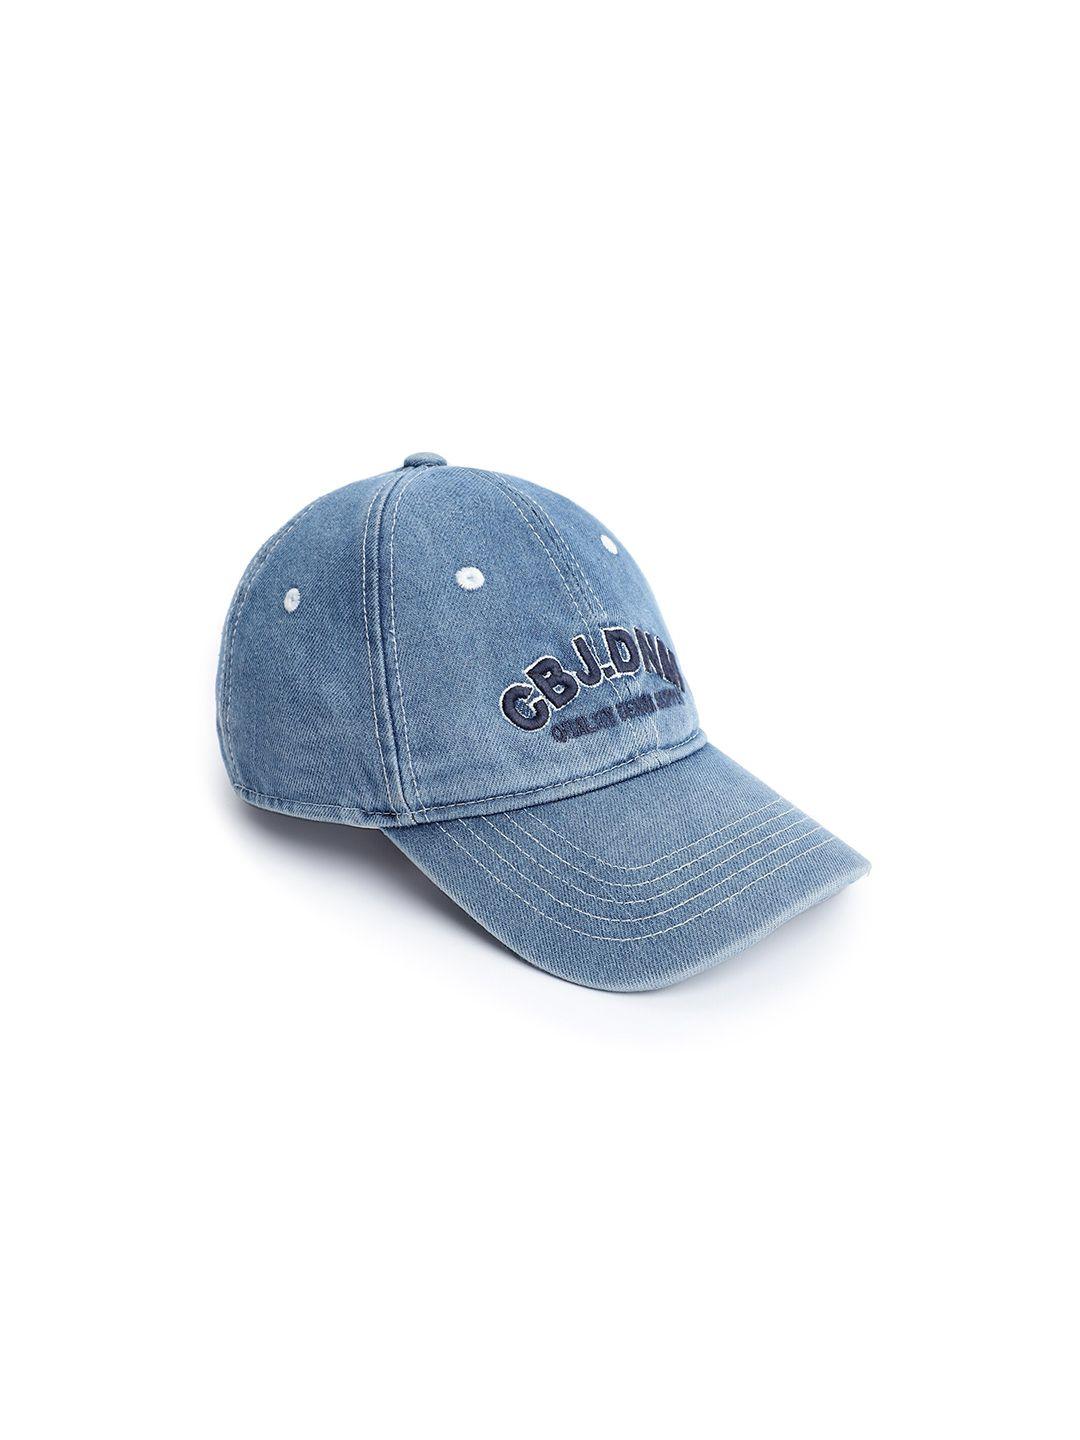 cantabil men blue embroidered baseball cap